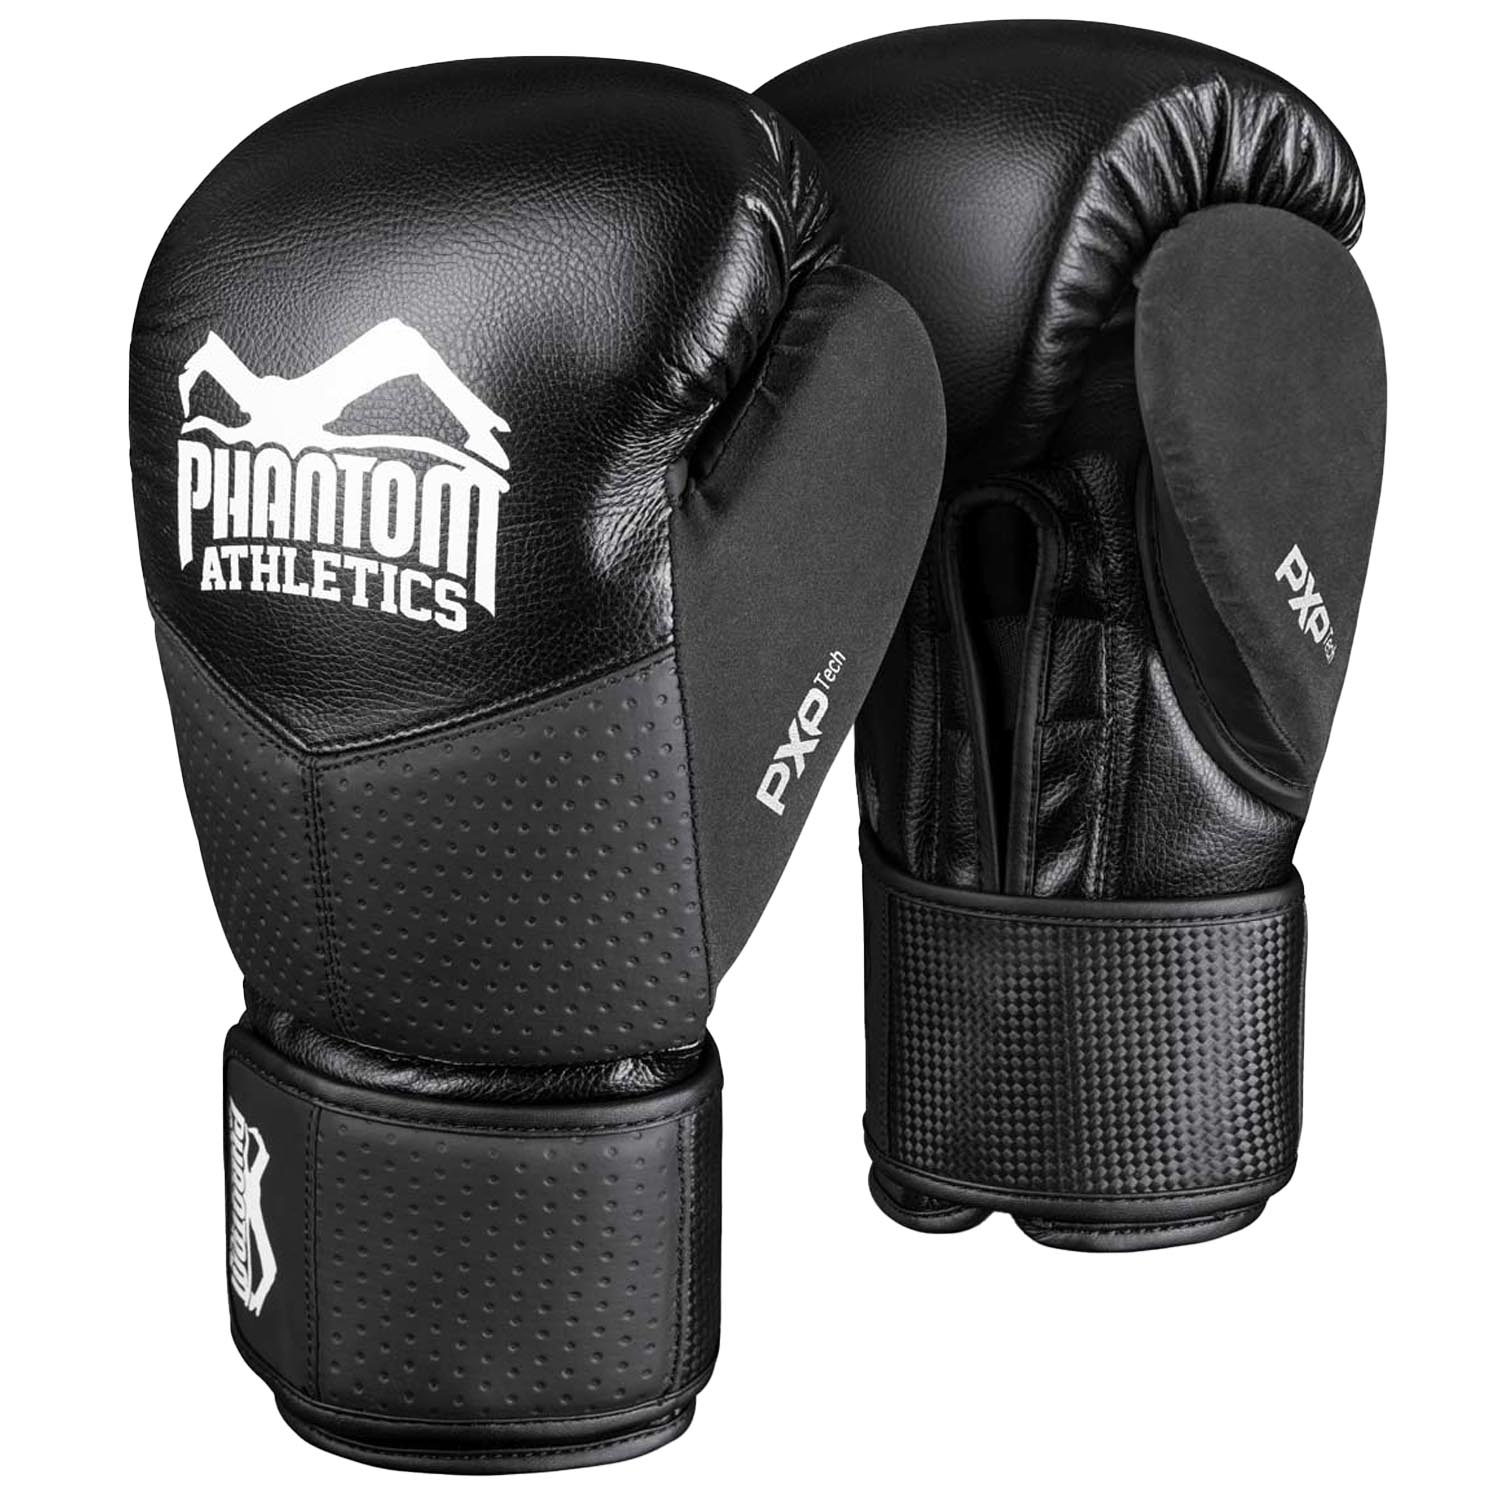 Phantom Athletics Boxing Gloves, Riot Pro, black